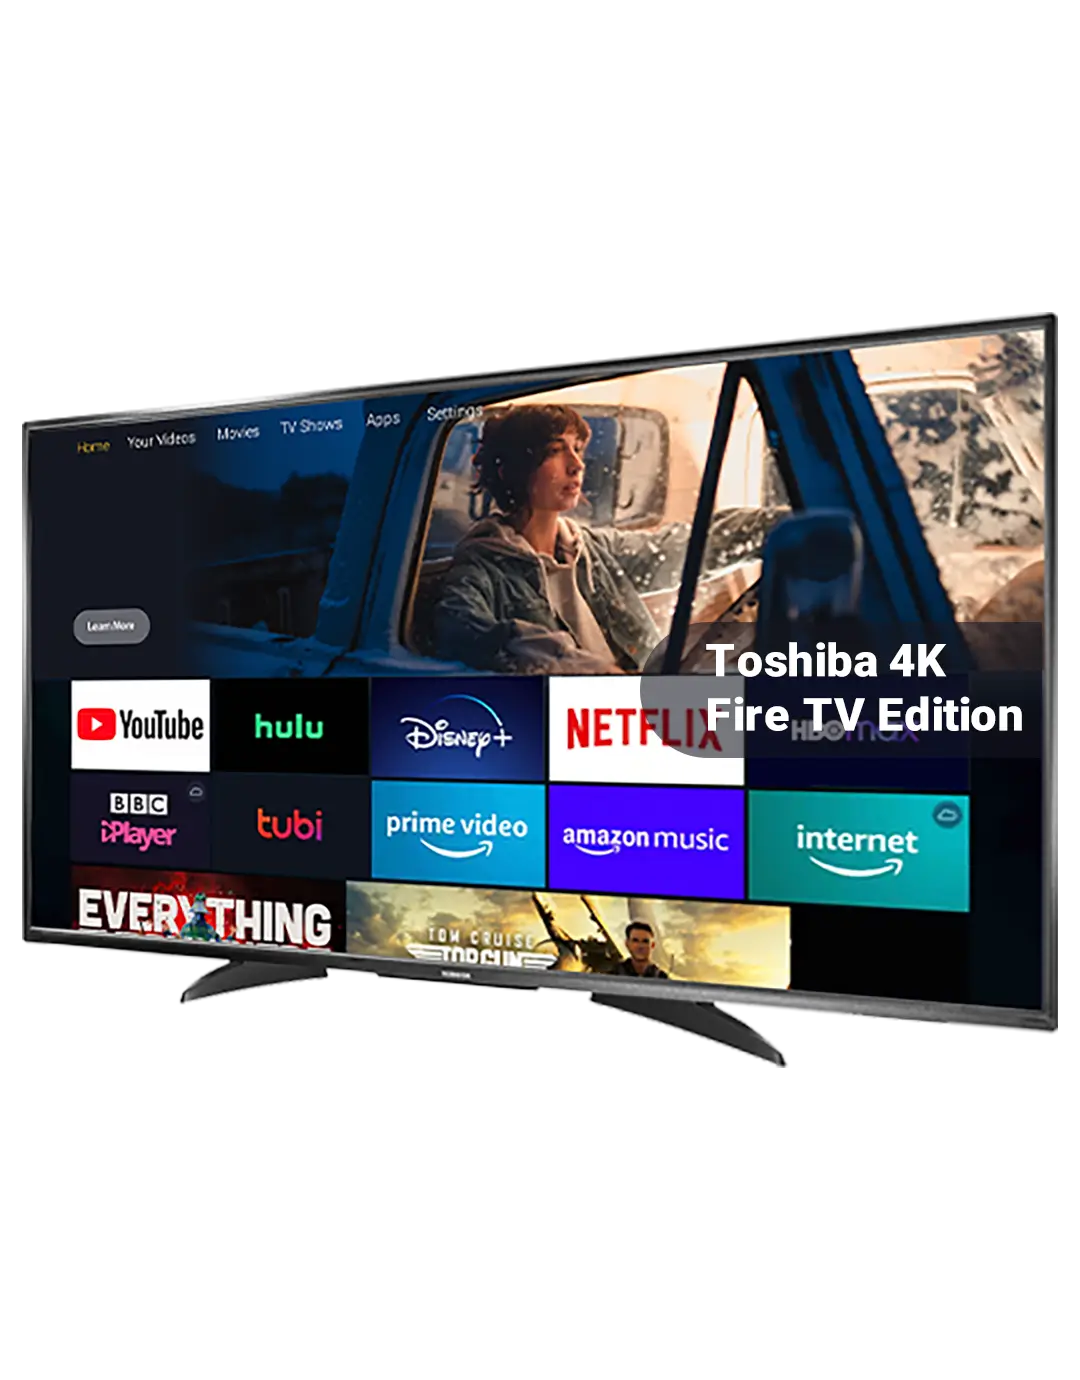 Toshiba 4K Fire TV Edition